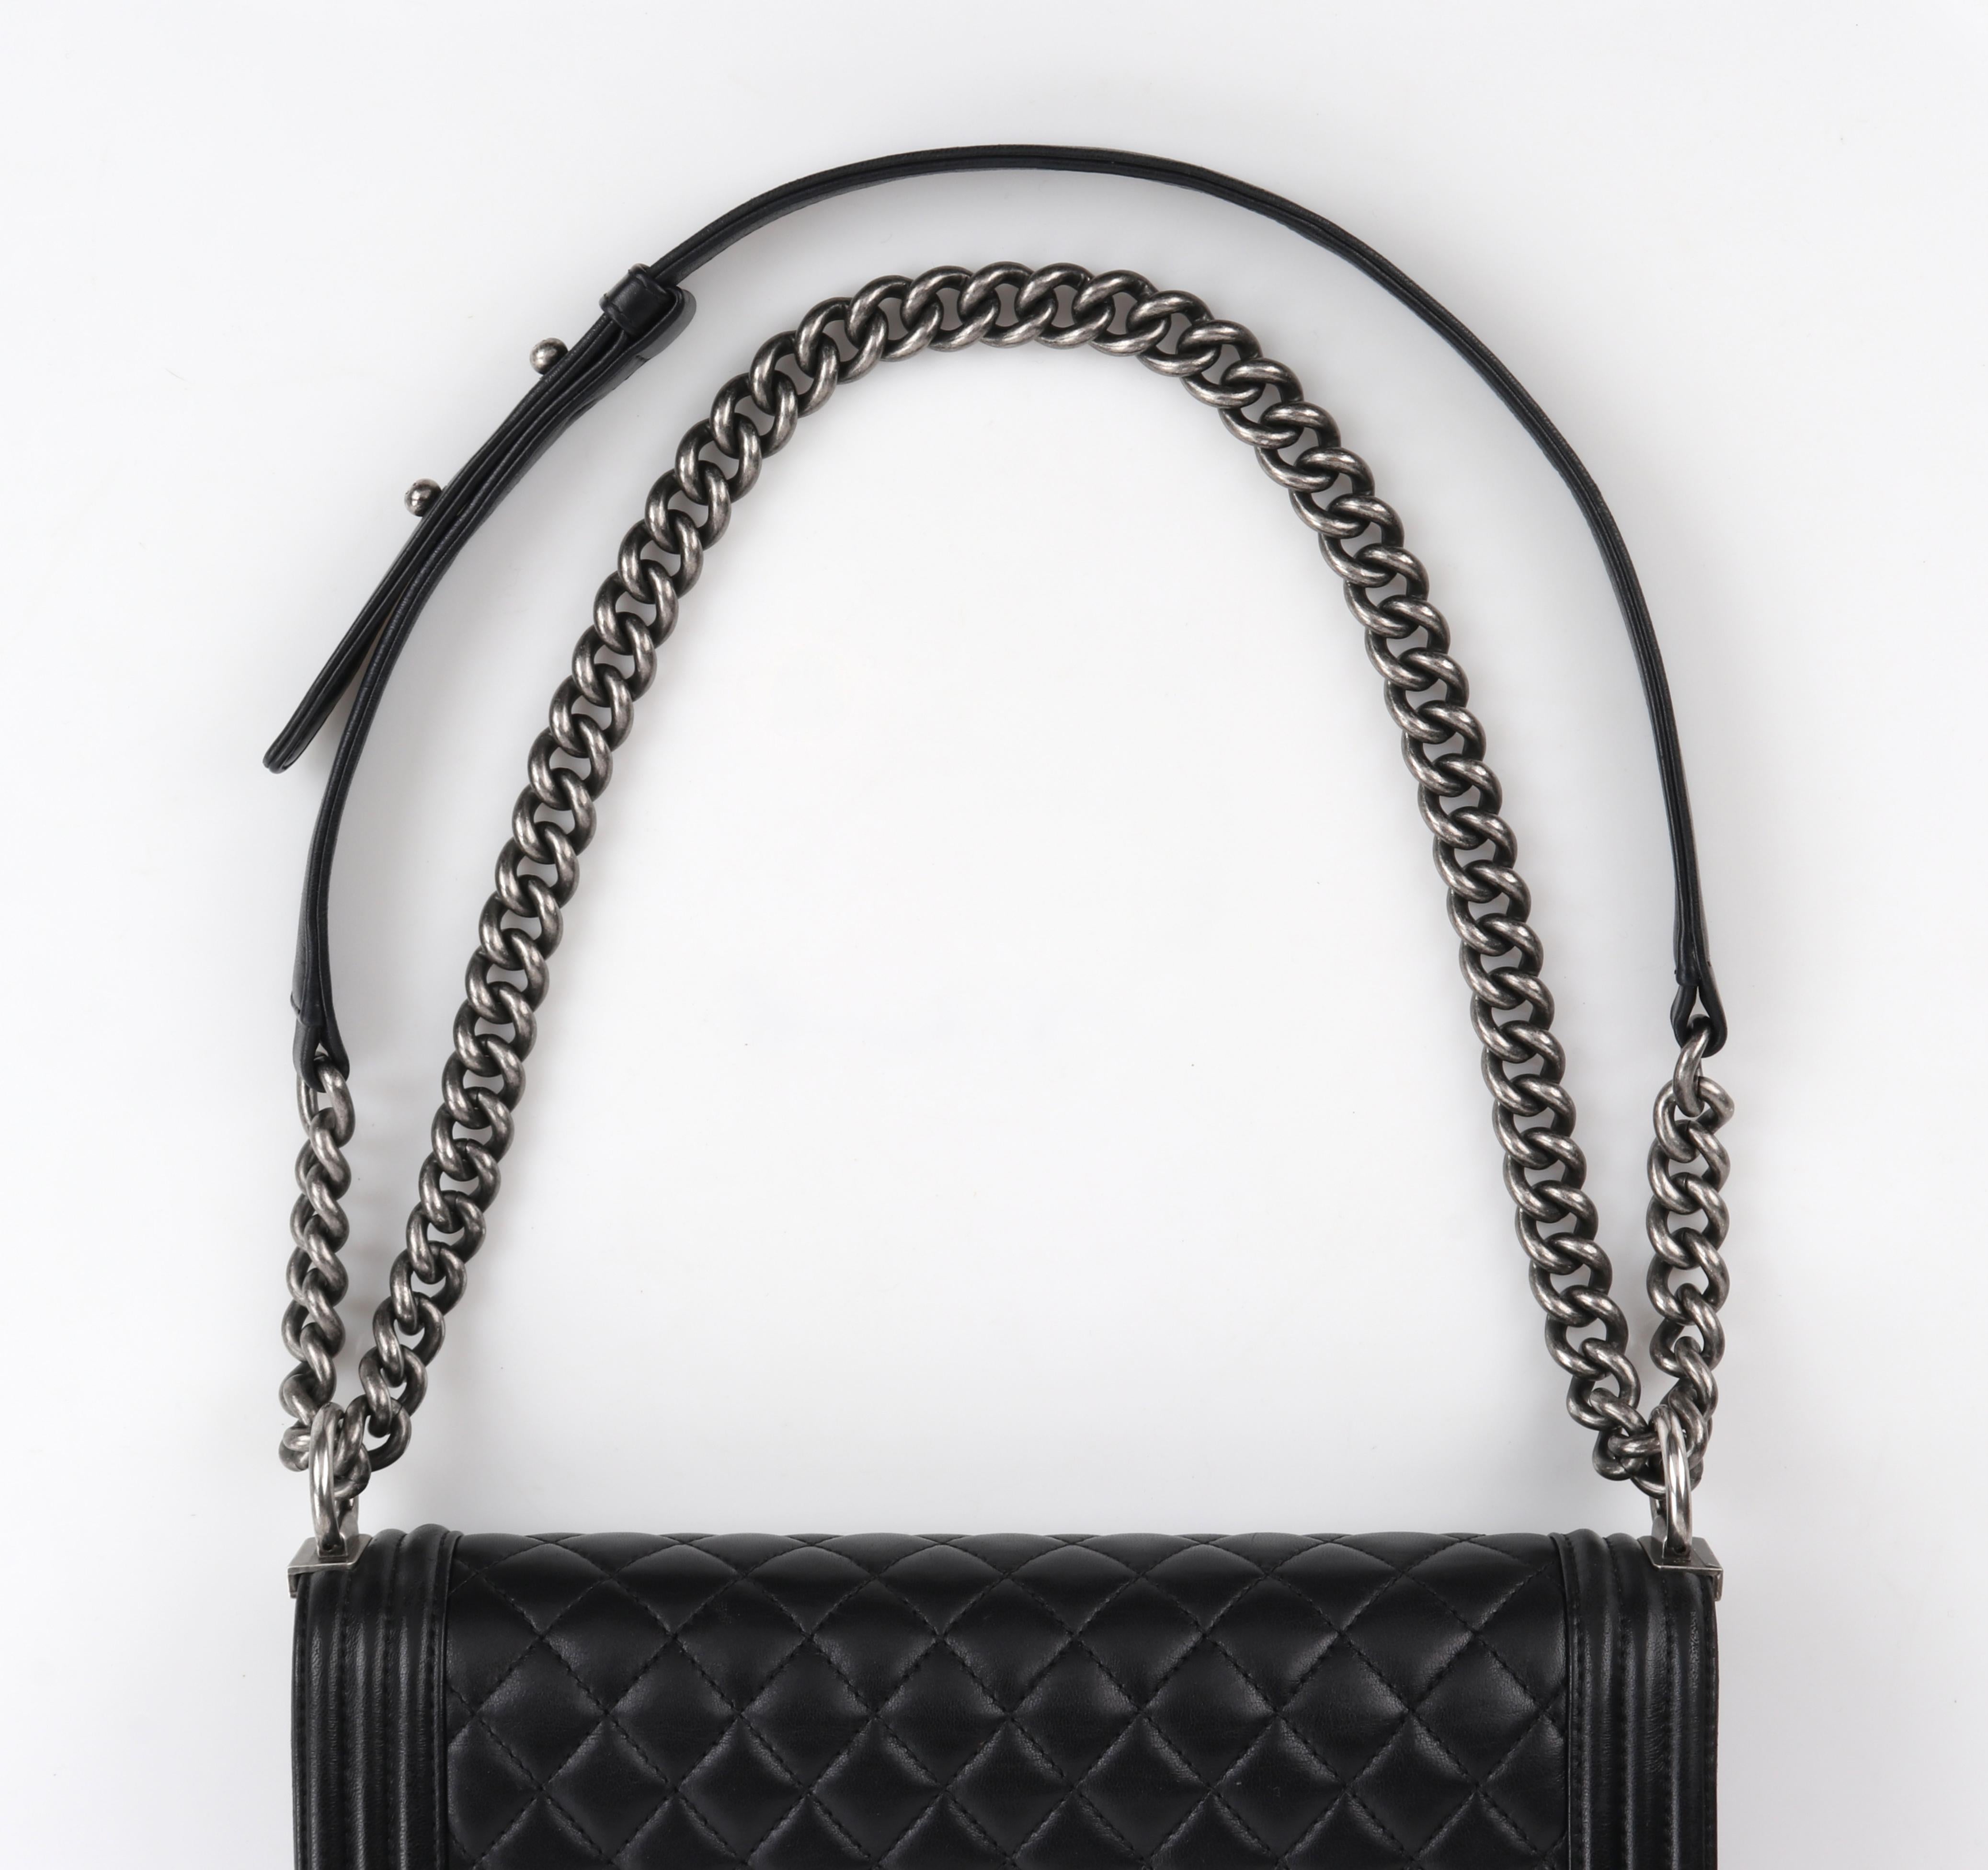 CHANEL c.2018 “Boy” Large Black Quilted Leather Flap Chain Strap Shoulder Bag 1